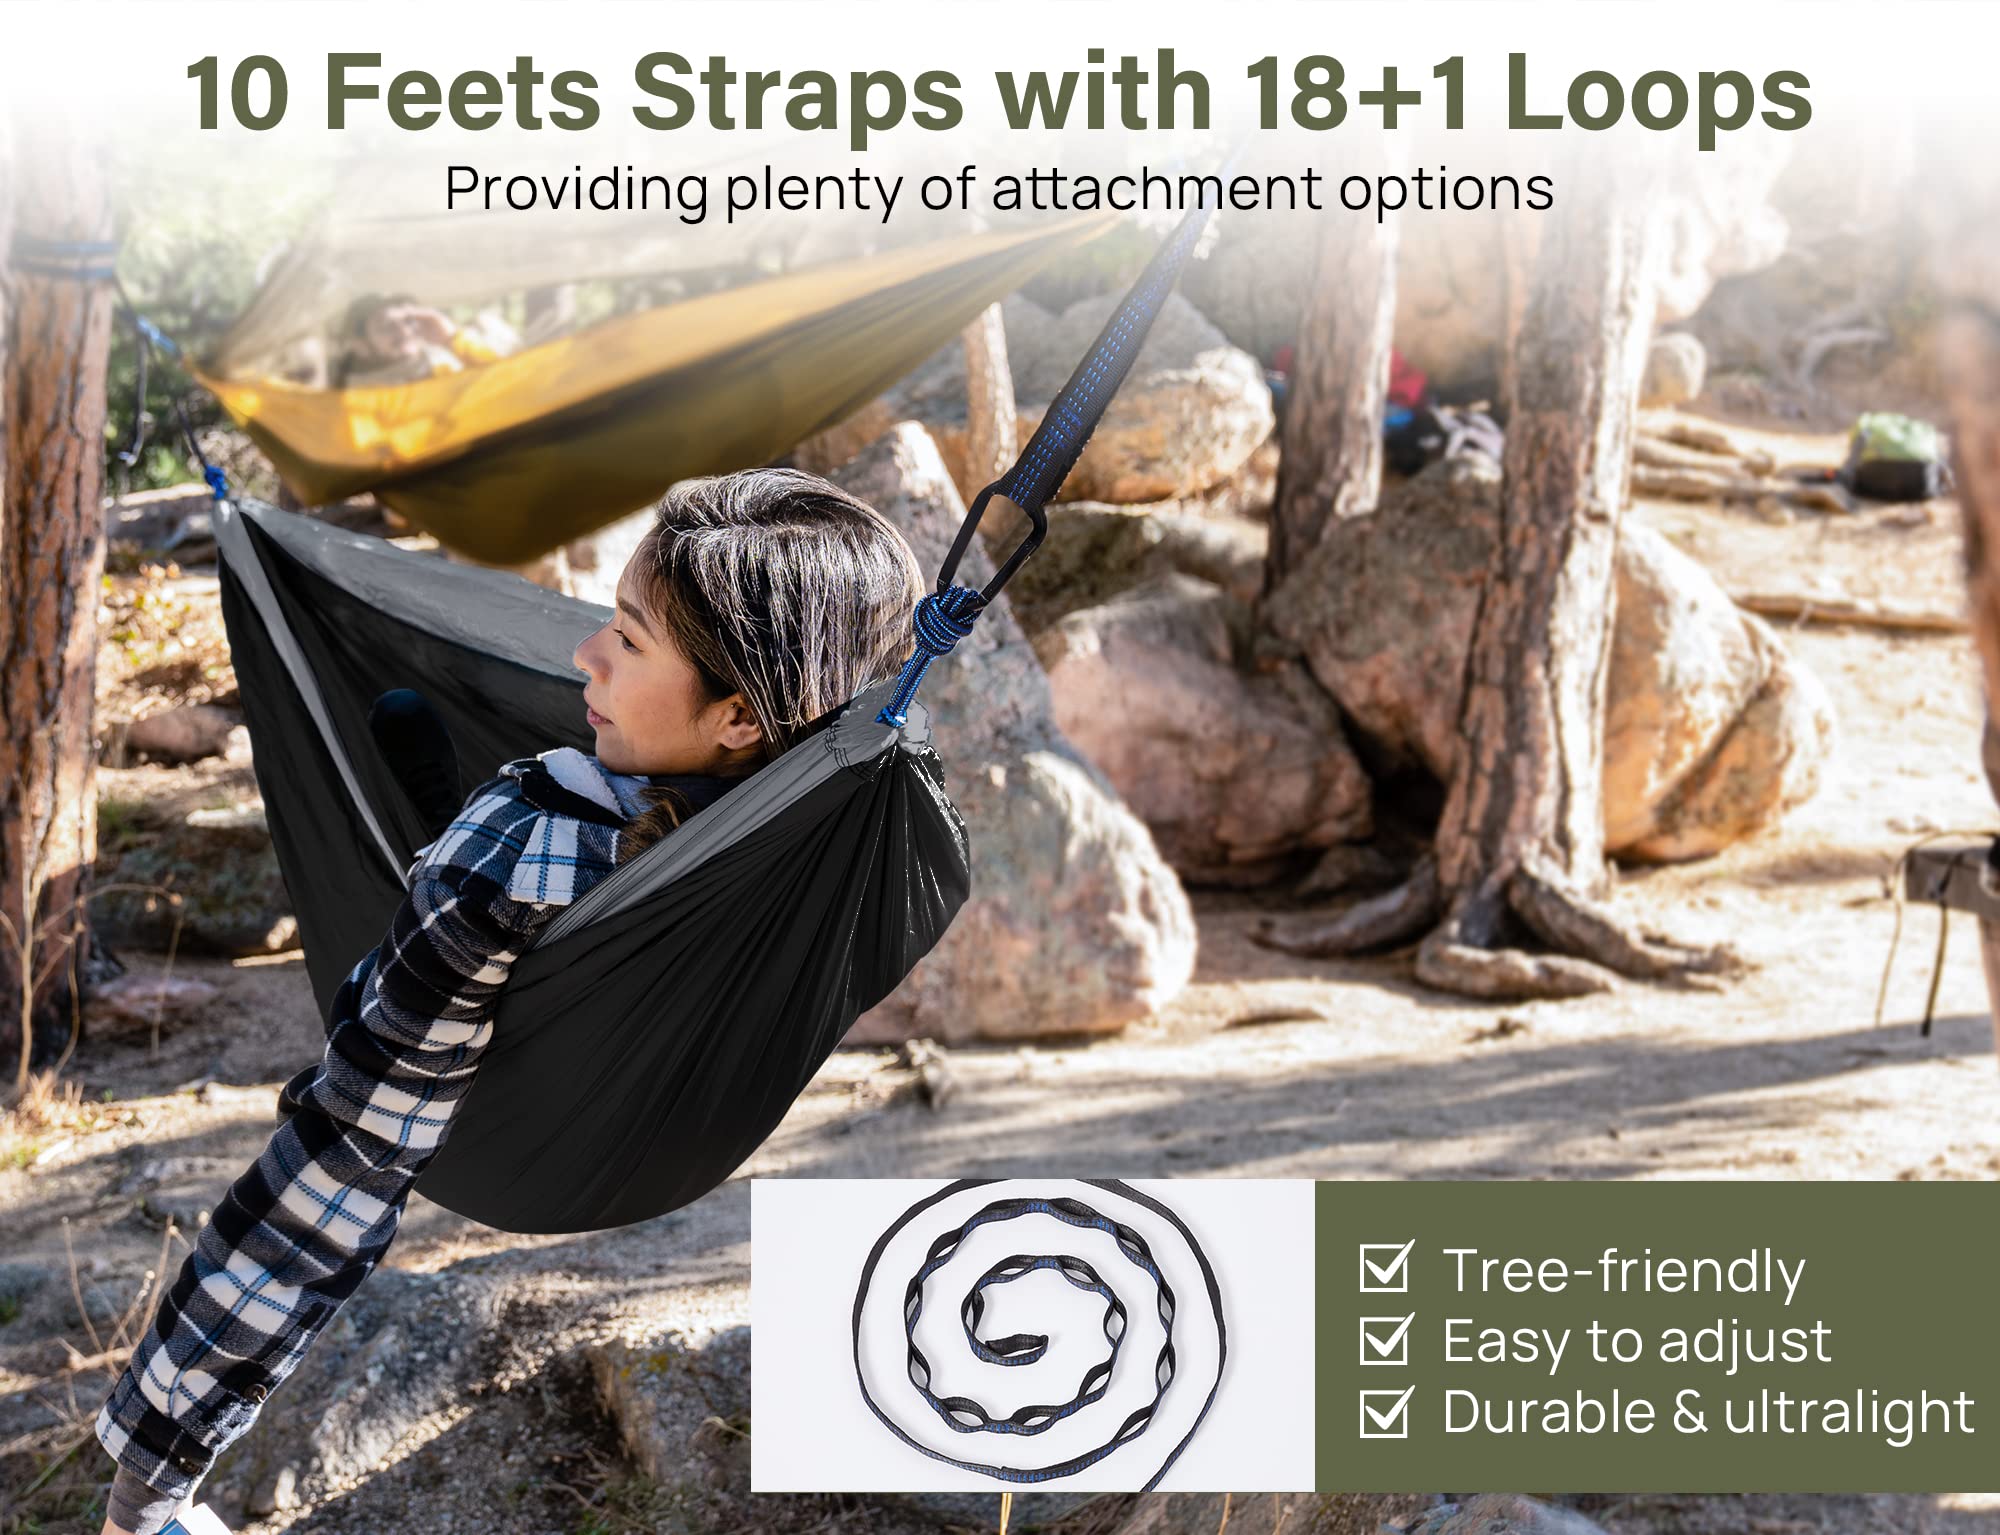 Kootek Camping Hammock Double Portable Hammocks with 2 Tree Straps, Lightweight Nylon Parachute Hammocks for Backpacking, Travel, Beach, Backyard, Patio, Hiking (Black & Grey, Large)